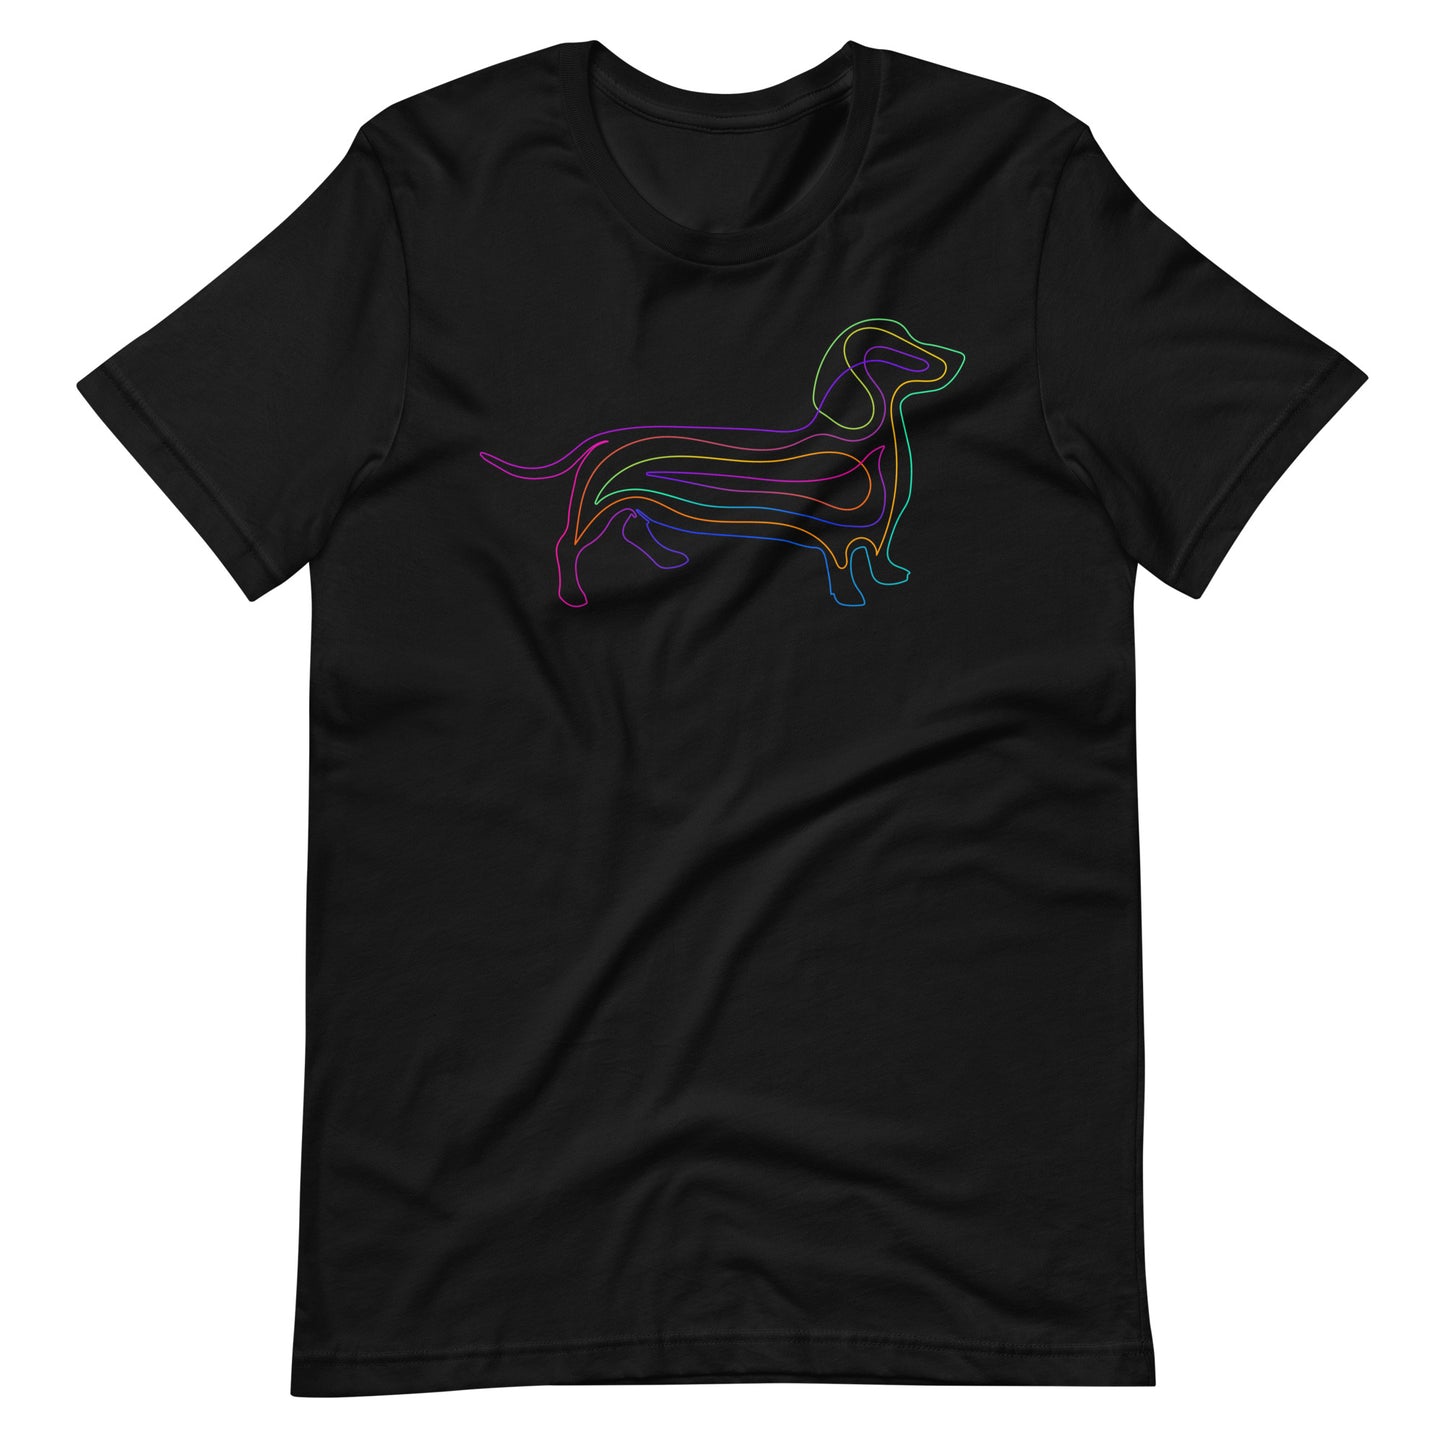 Colored line Dachshund on unisex black t-shirt